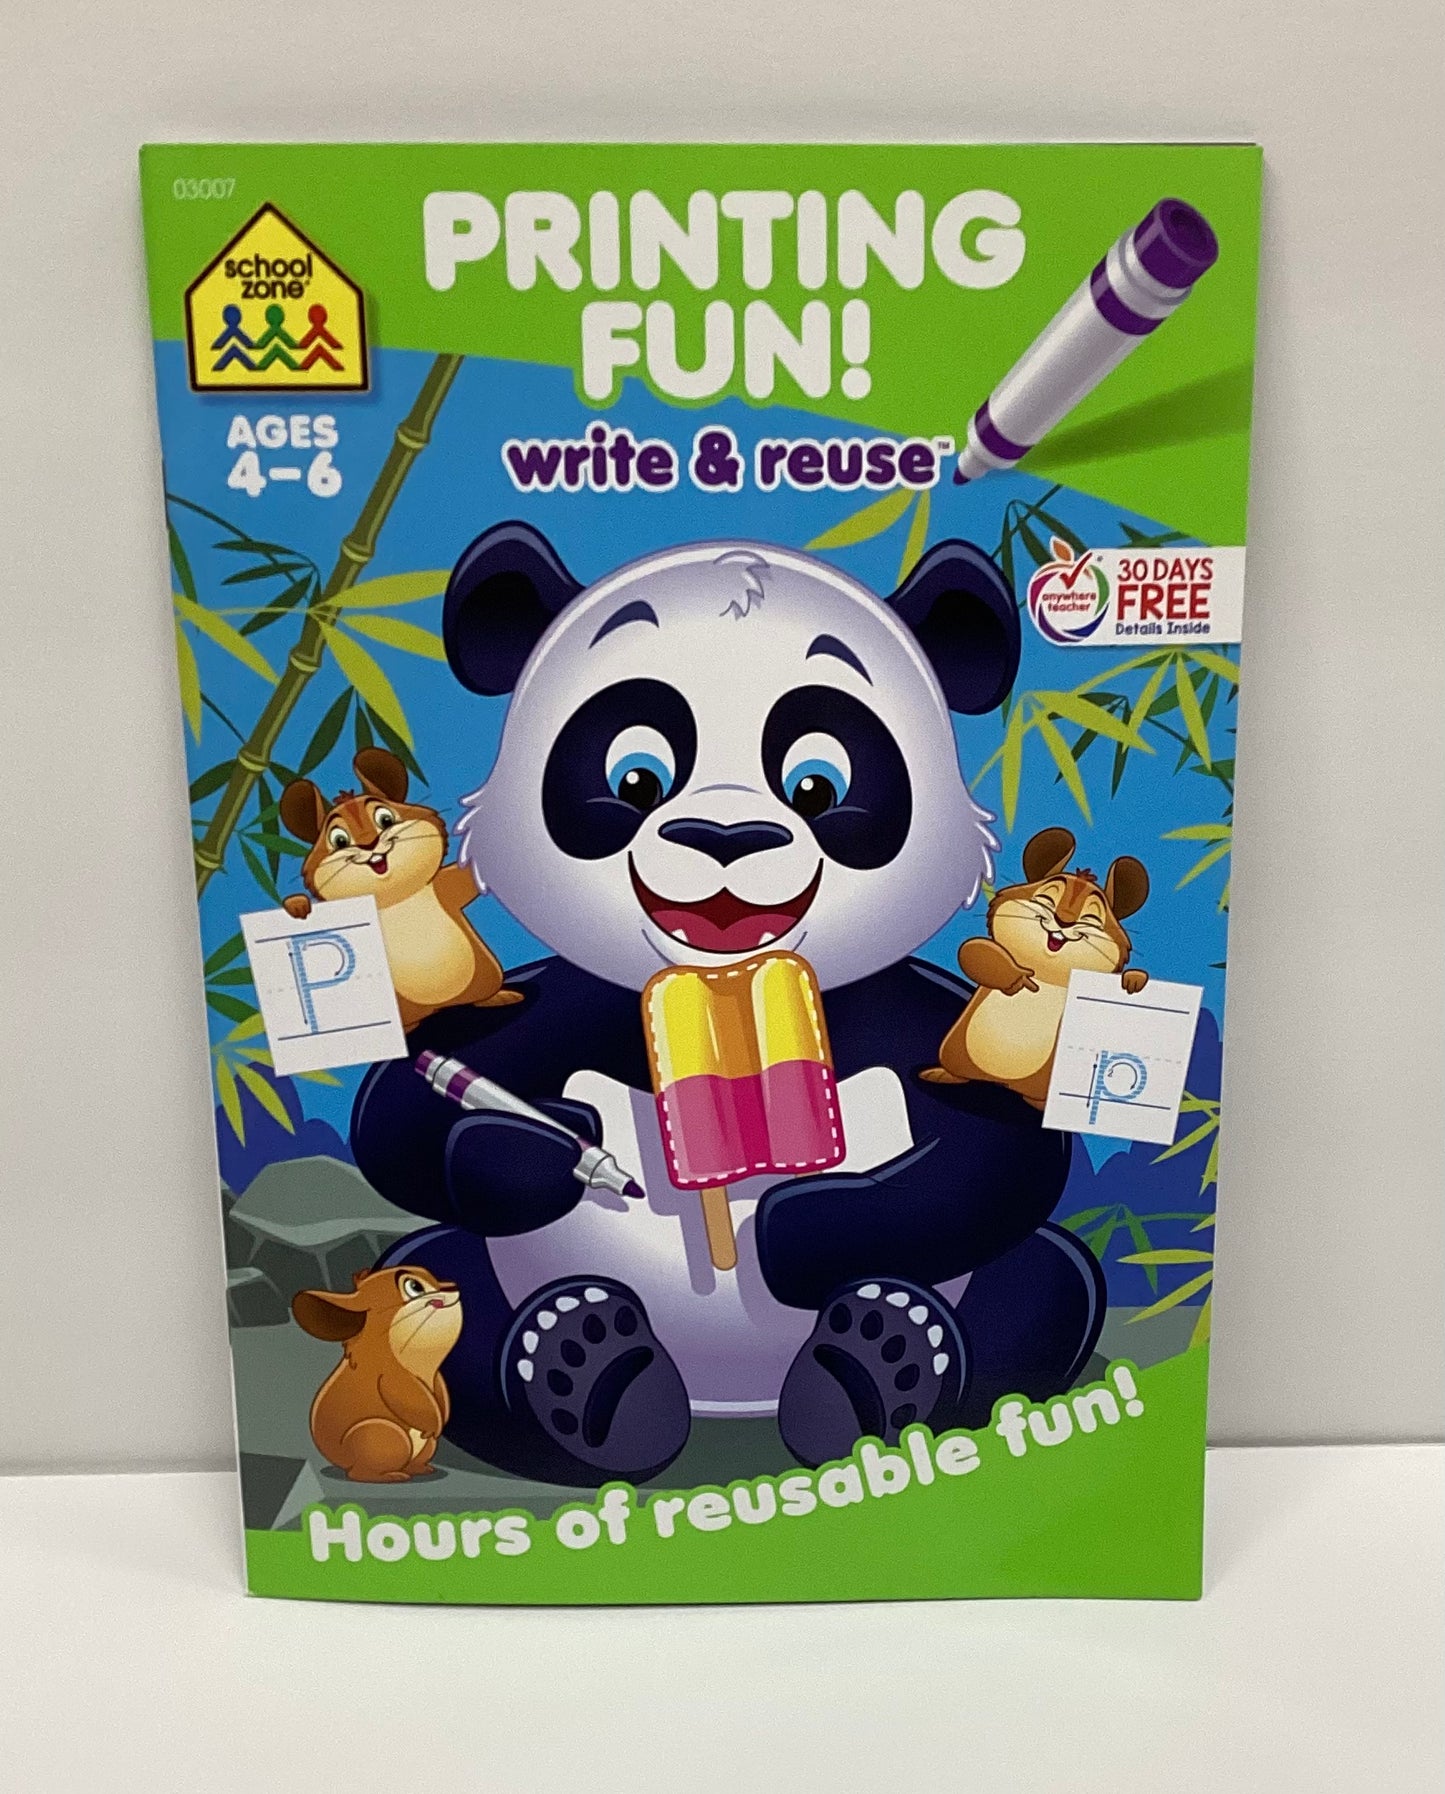 Printing Fun-Write and reuse.